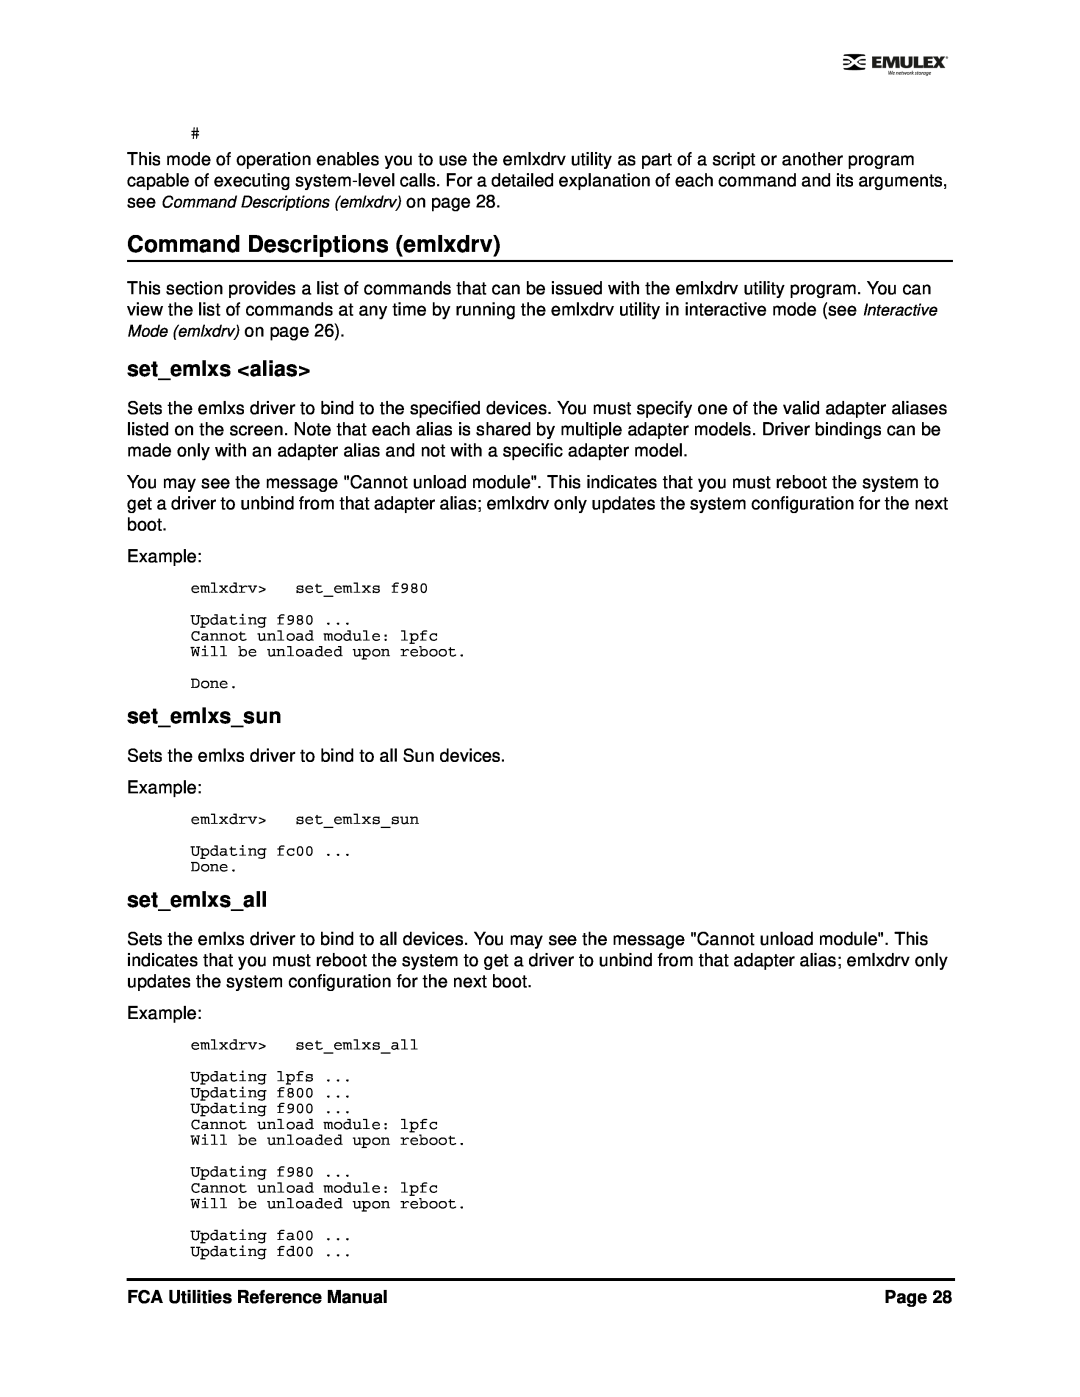 Emulex EMULEX Command Descriptions emlxdrv, setemlxs alias, setemlxssun, setemlxsall, FCA Utilities Reference Manual, Page 